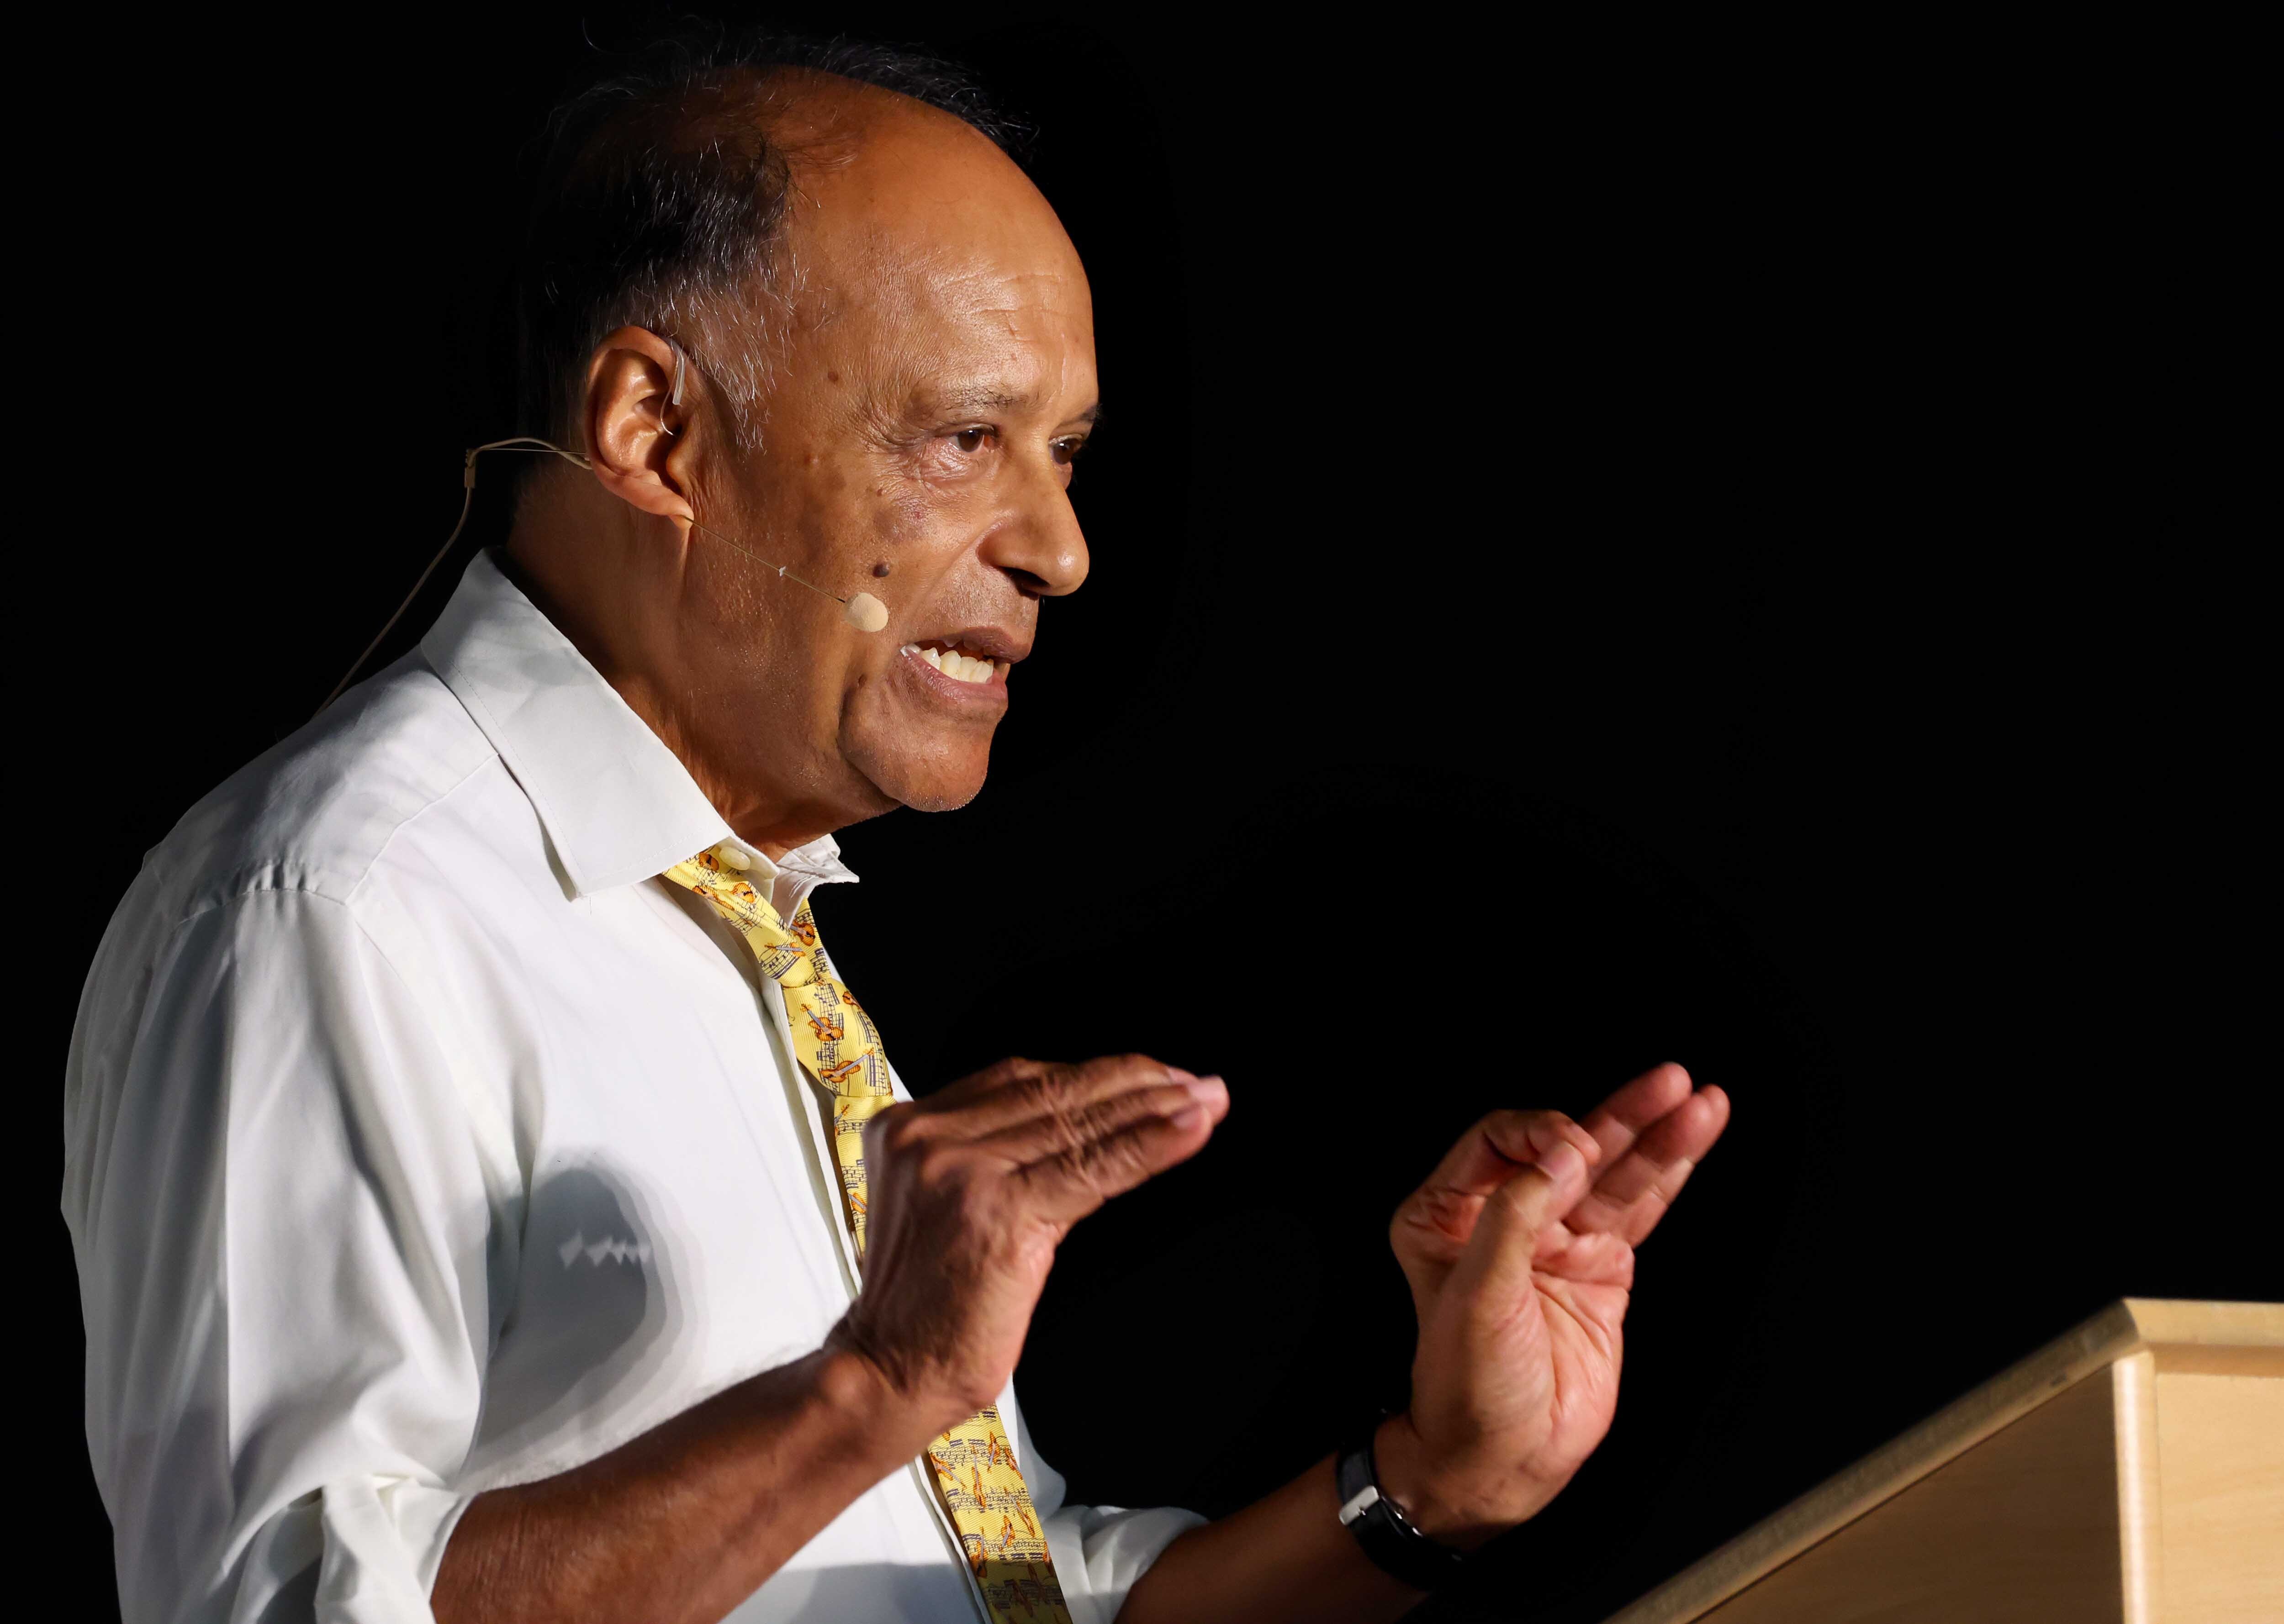 Professor Sir Partha Dasgupta speaks at a lectern.